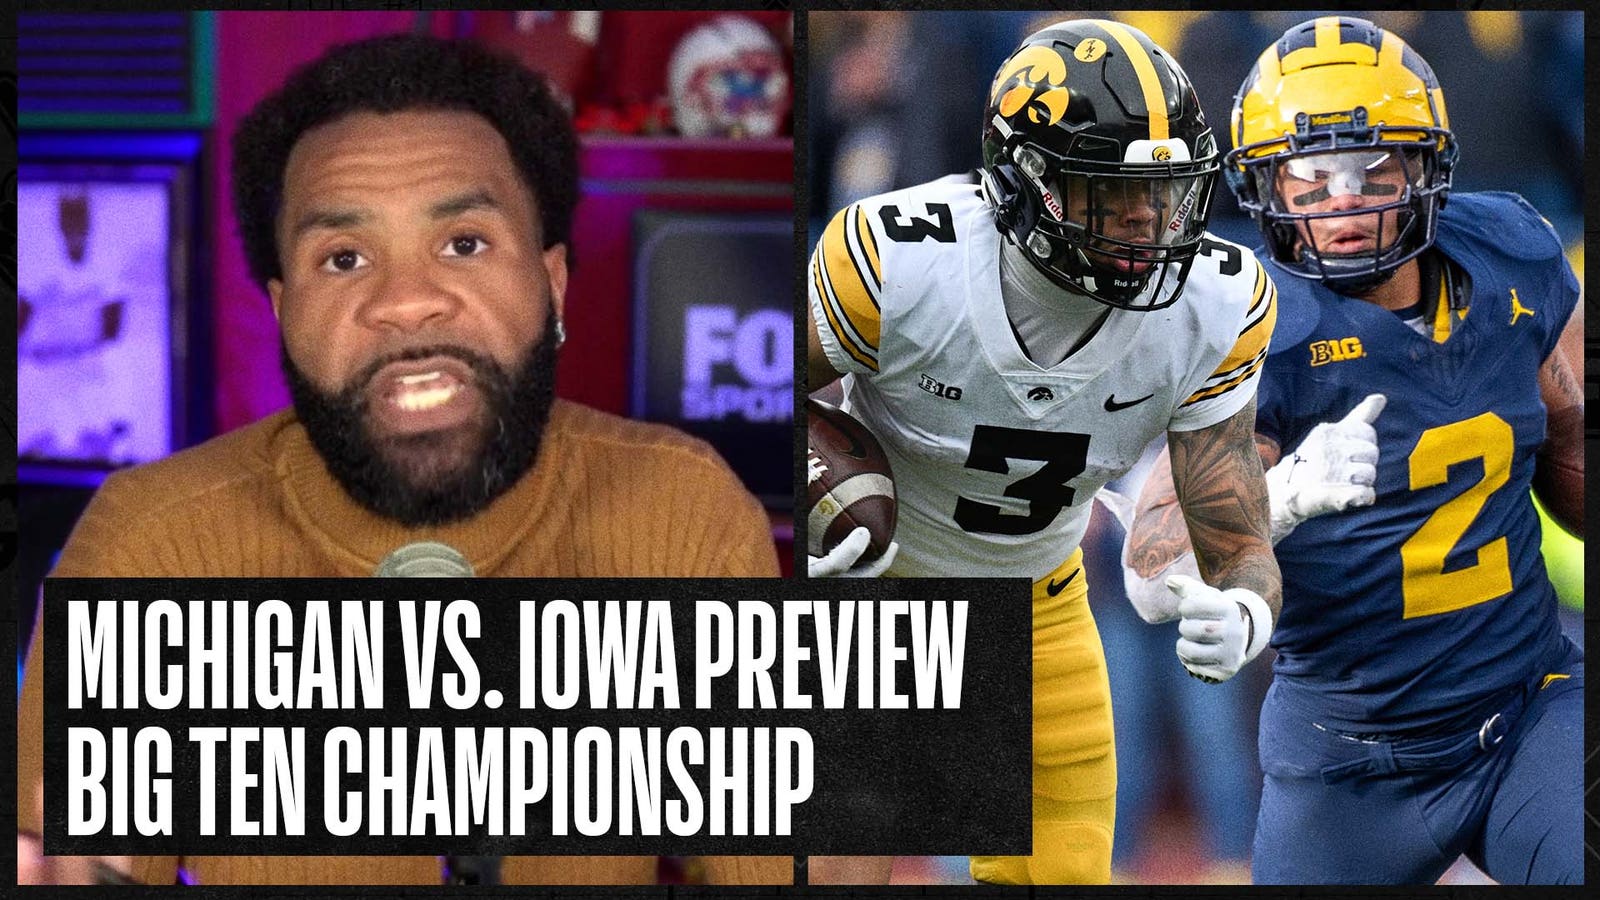 No. 2 Michigan vs. No. 16 Iowa preview